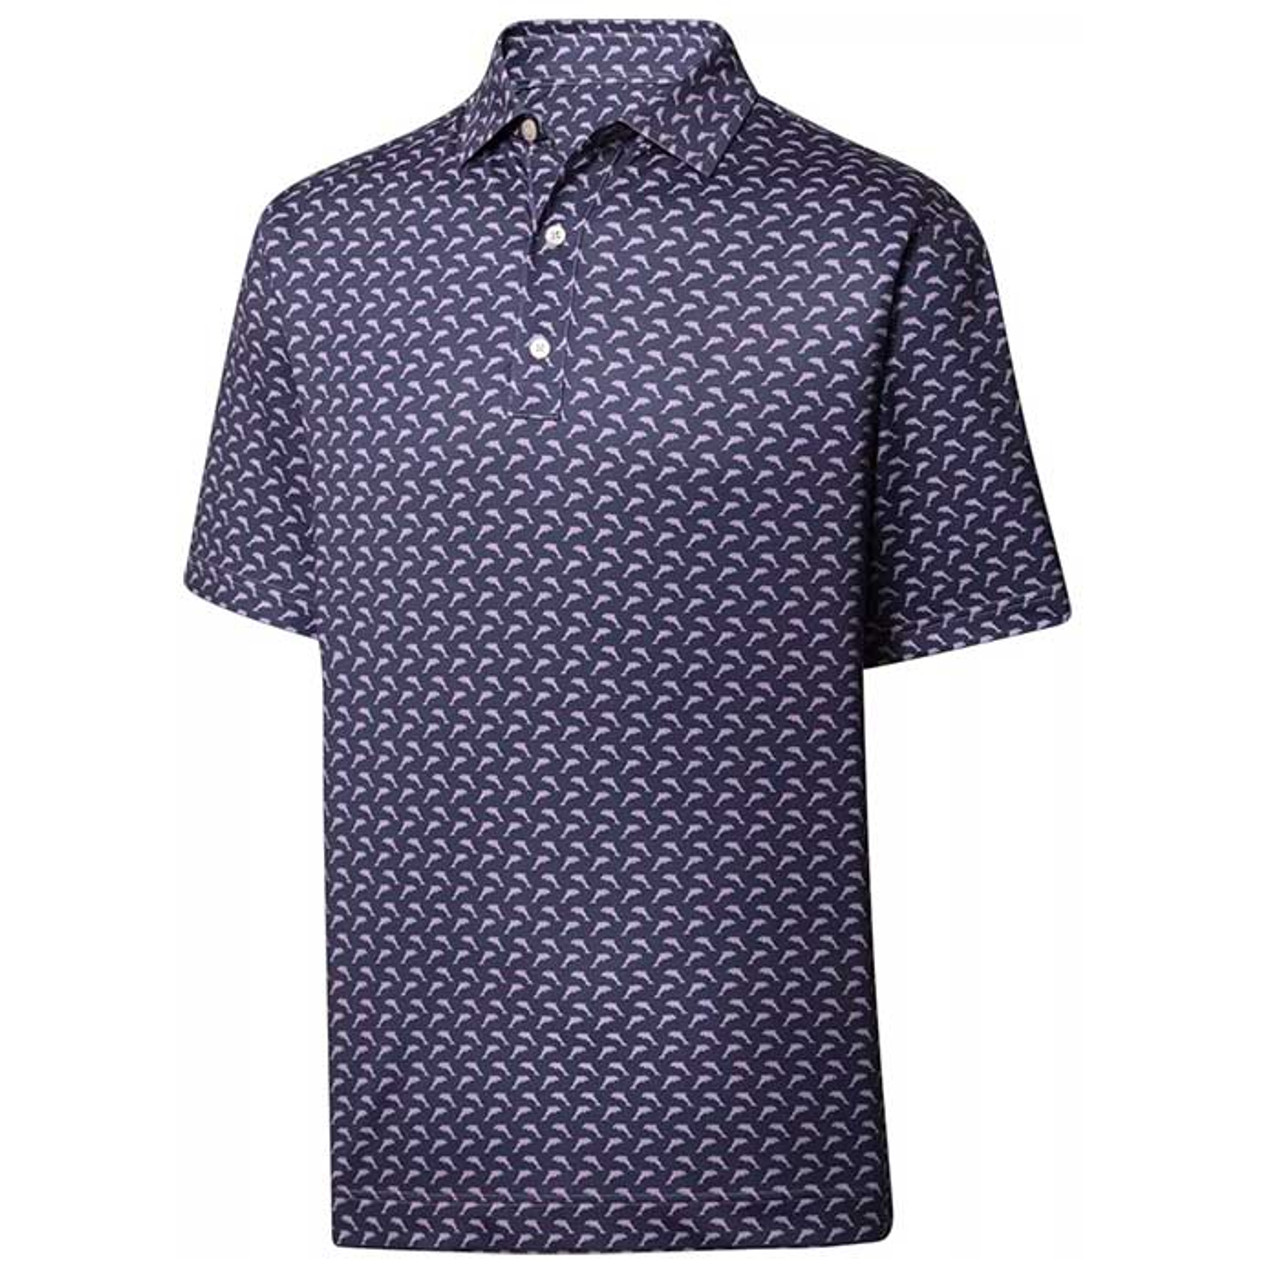 New Men's FootJoy Leaping Print Golf Shirt - 29566 - Dallas Company